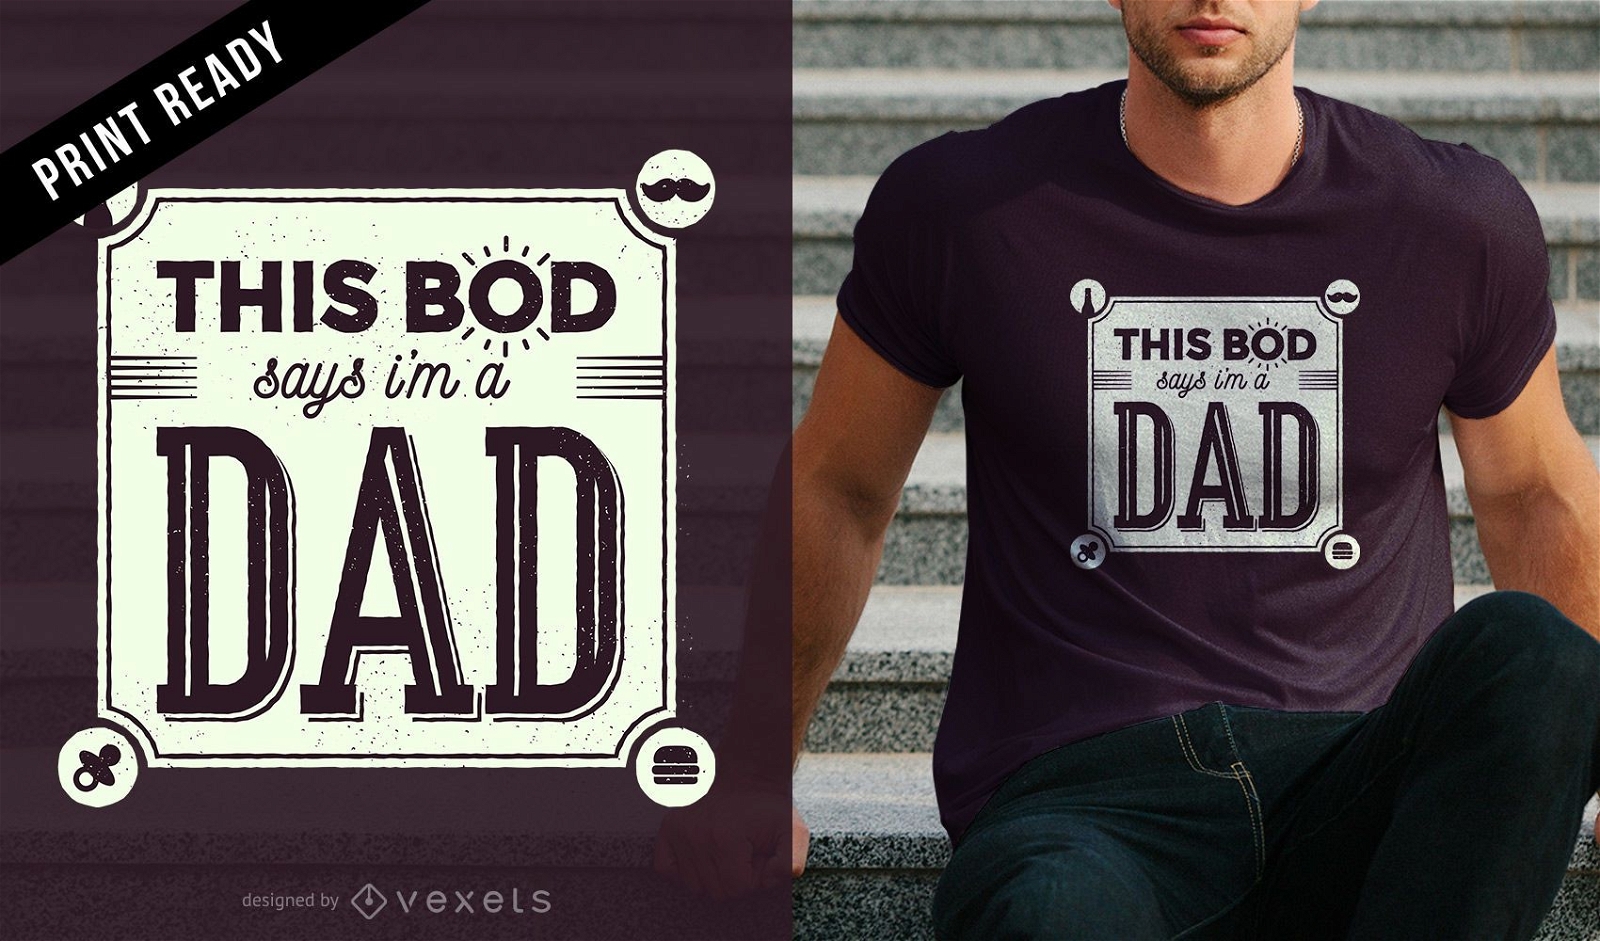 I am a dad t-shirt design